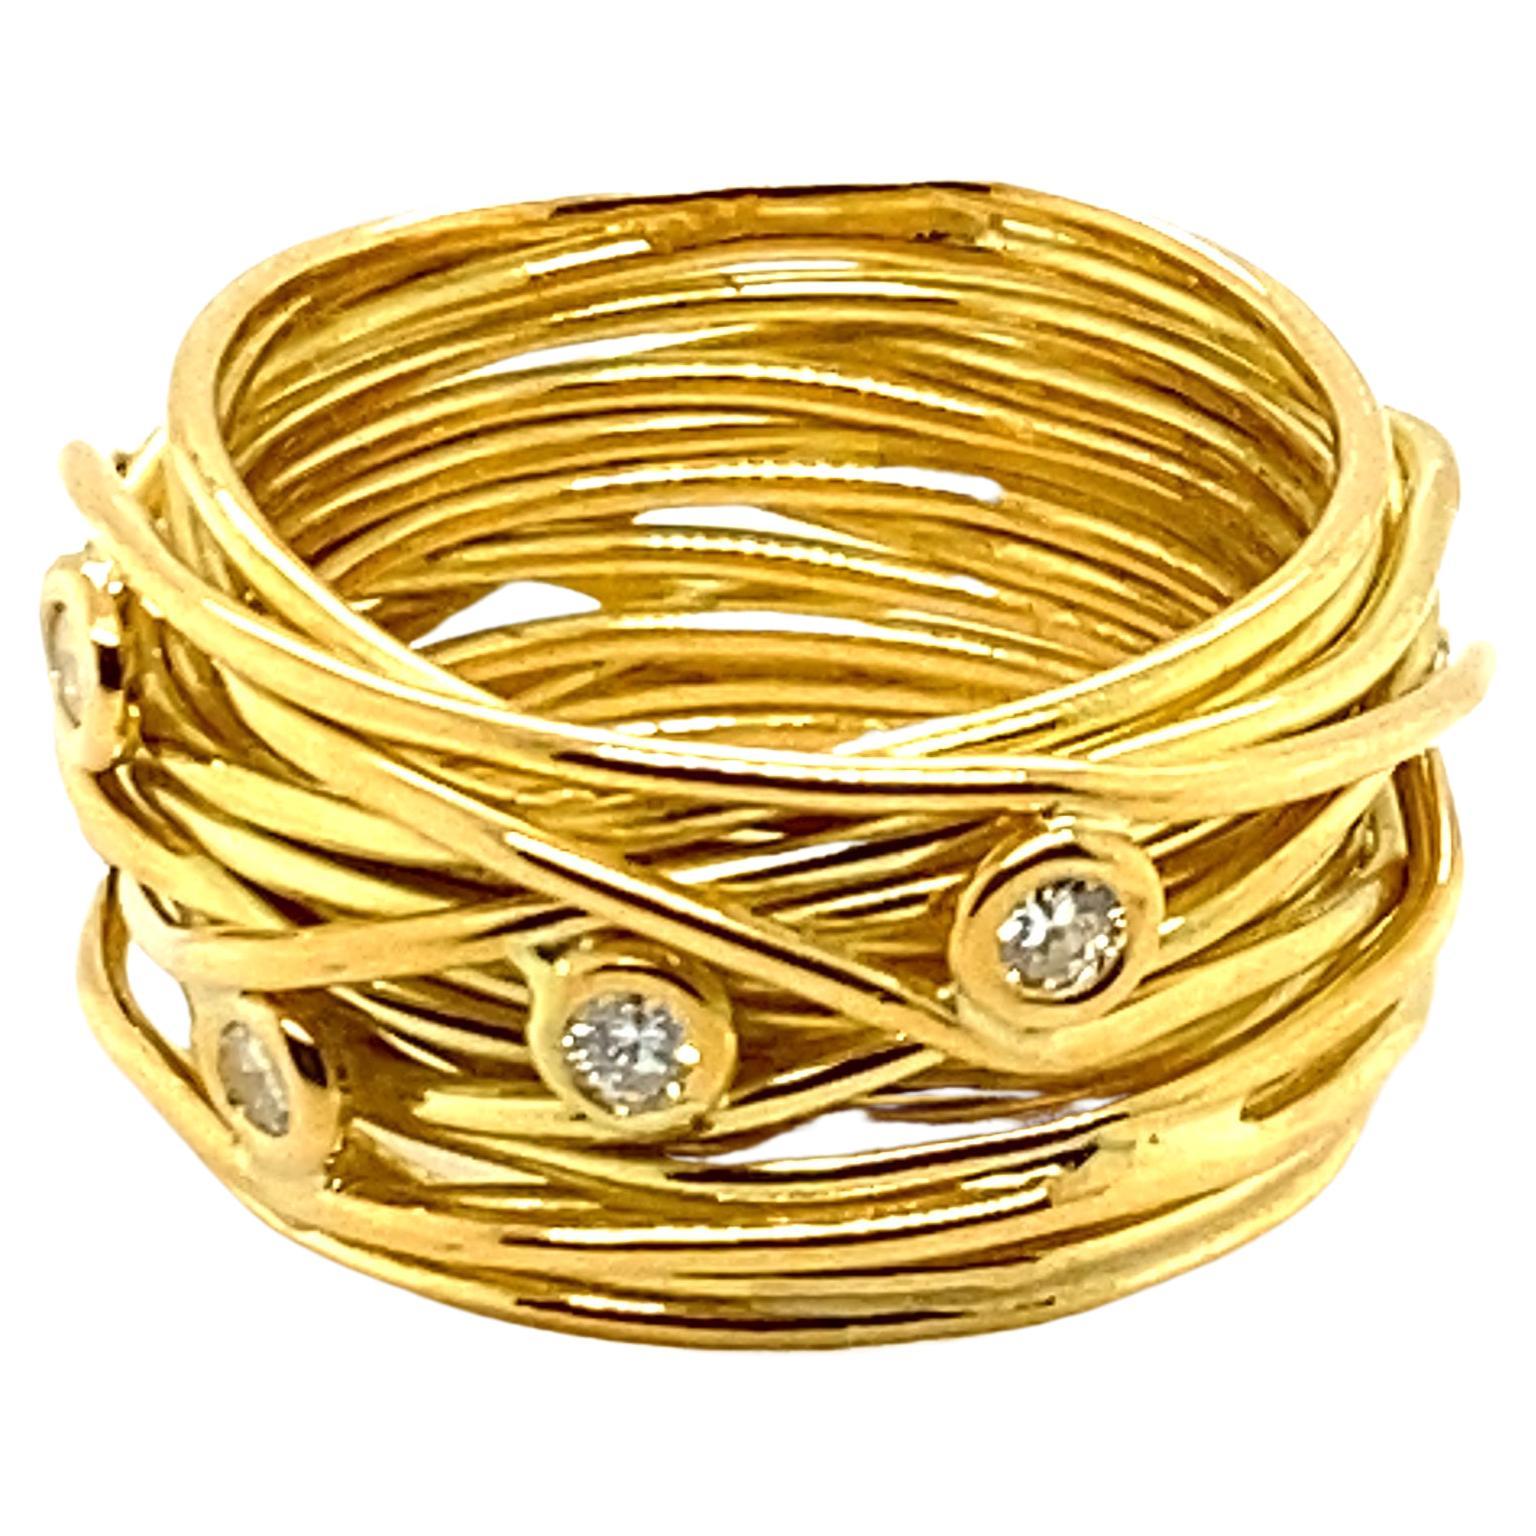 Iconic Diamond Bird's Nest Ring by Devon in 18 Karat Yellow Gold